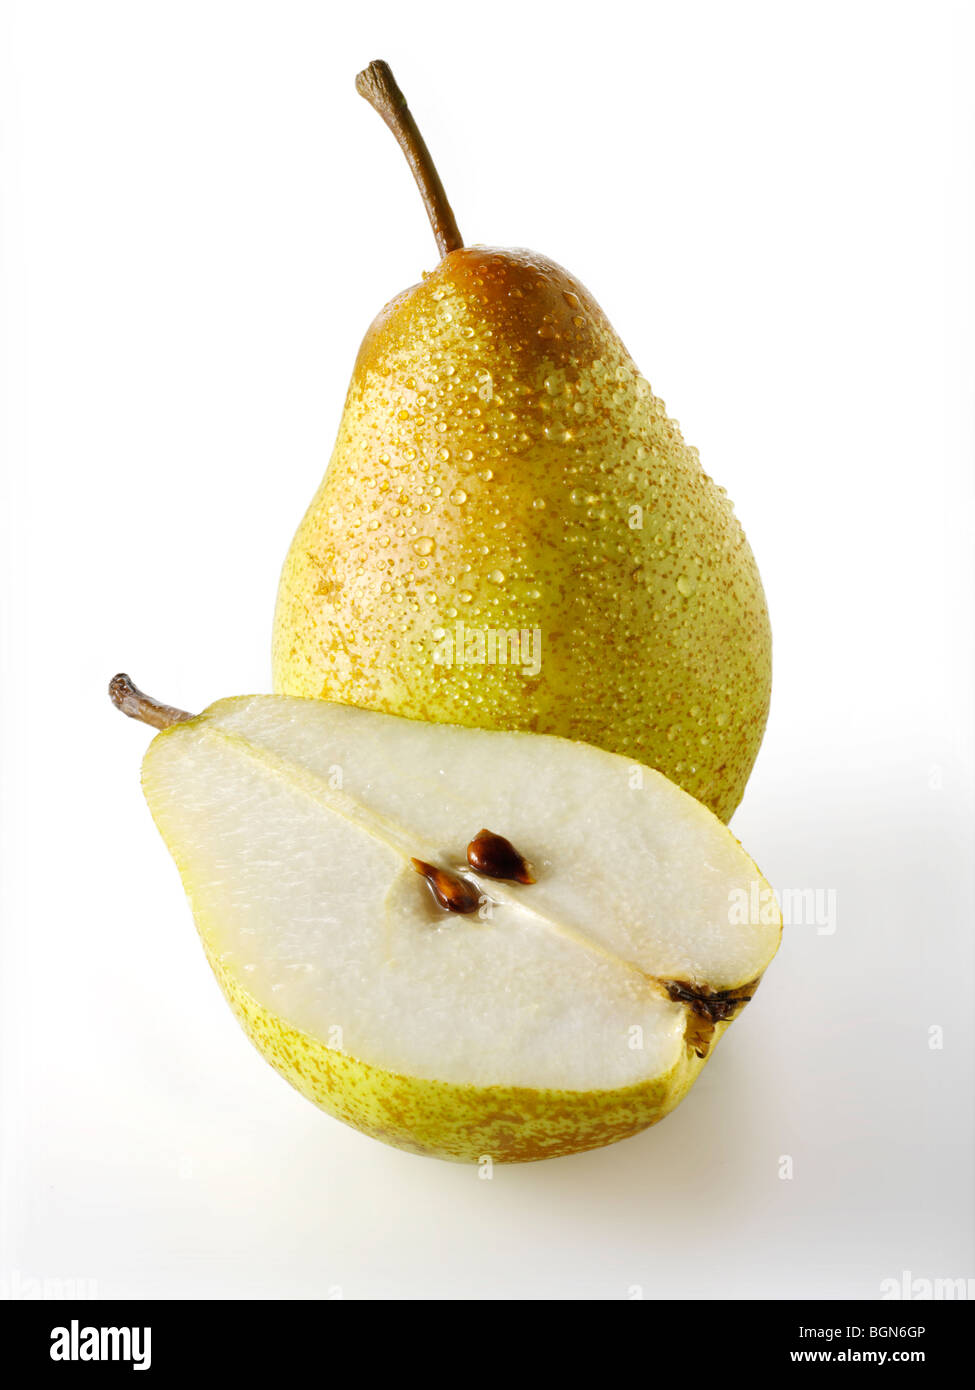 Fresh comice pears whole and cut Stock Photo - Alamy